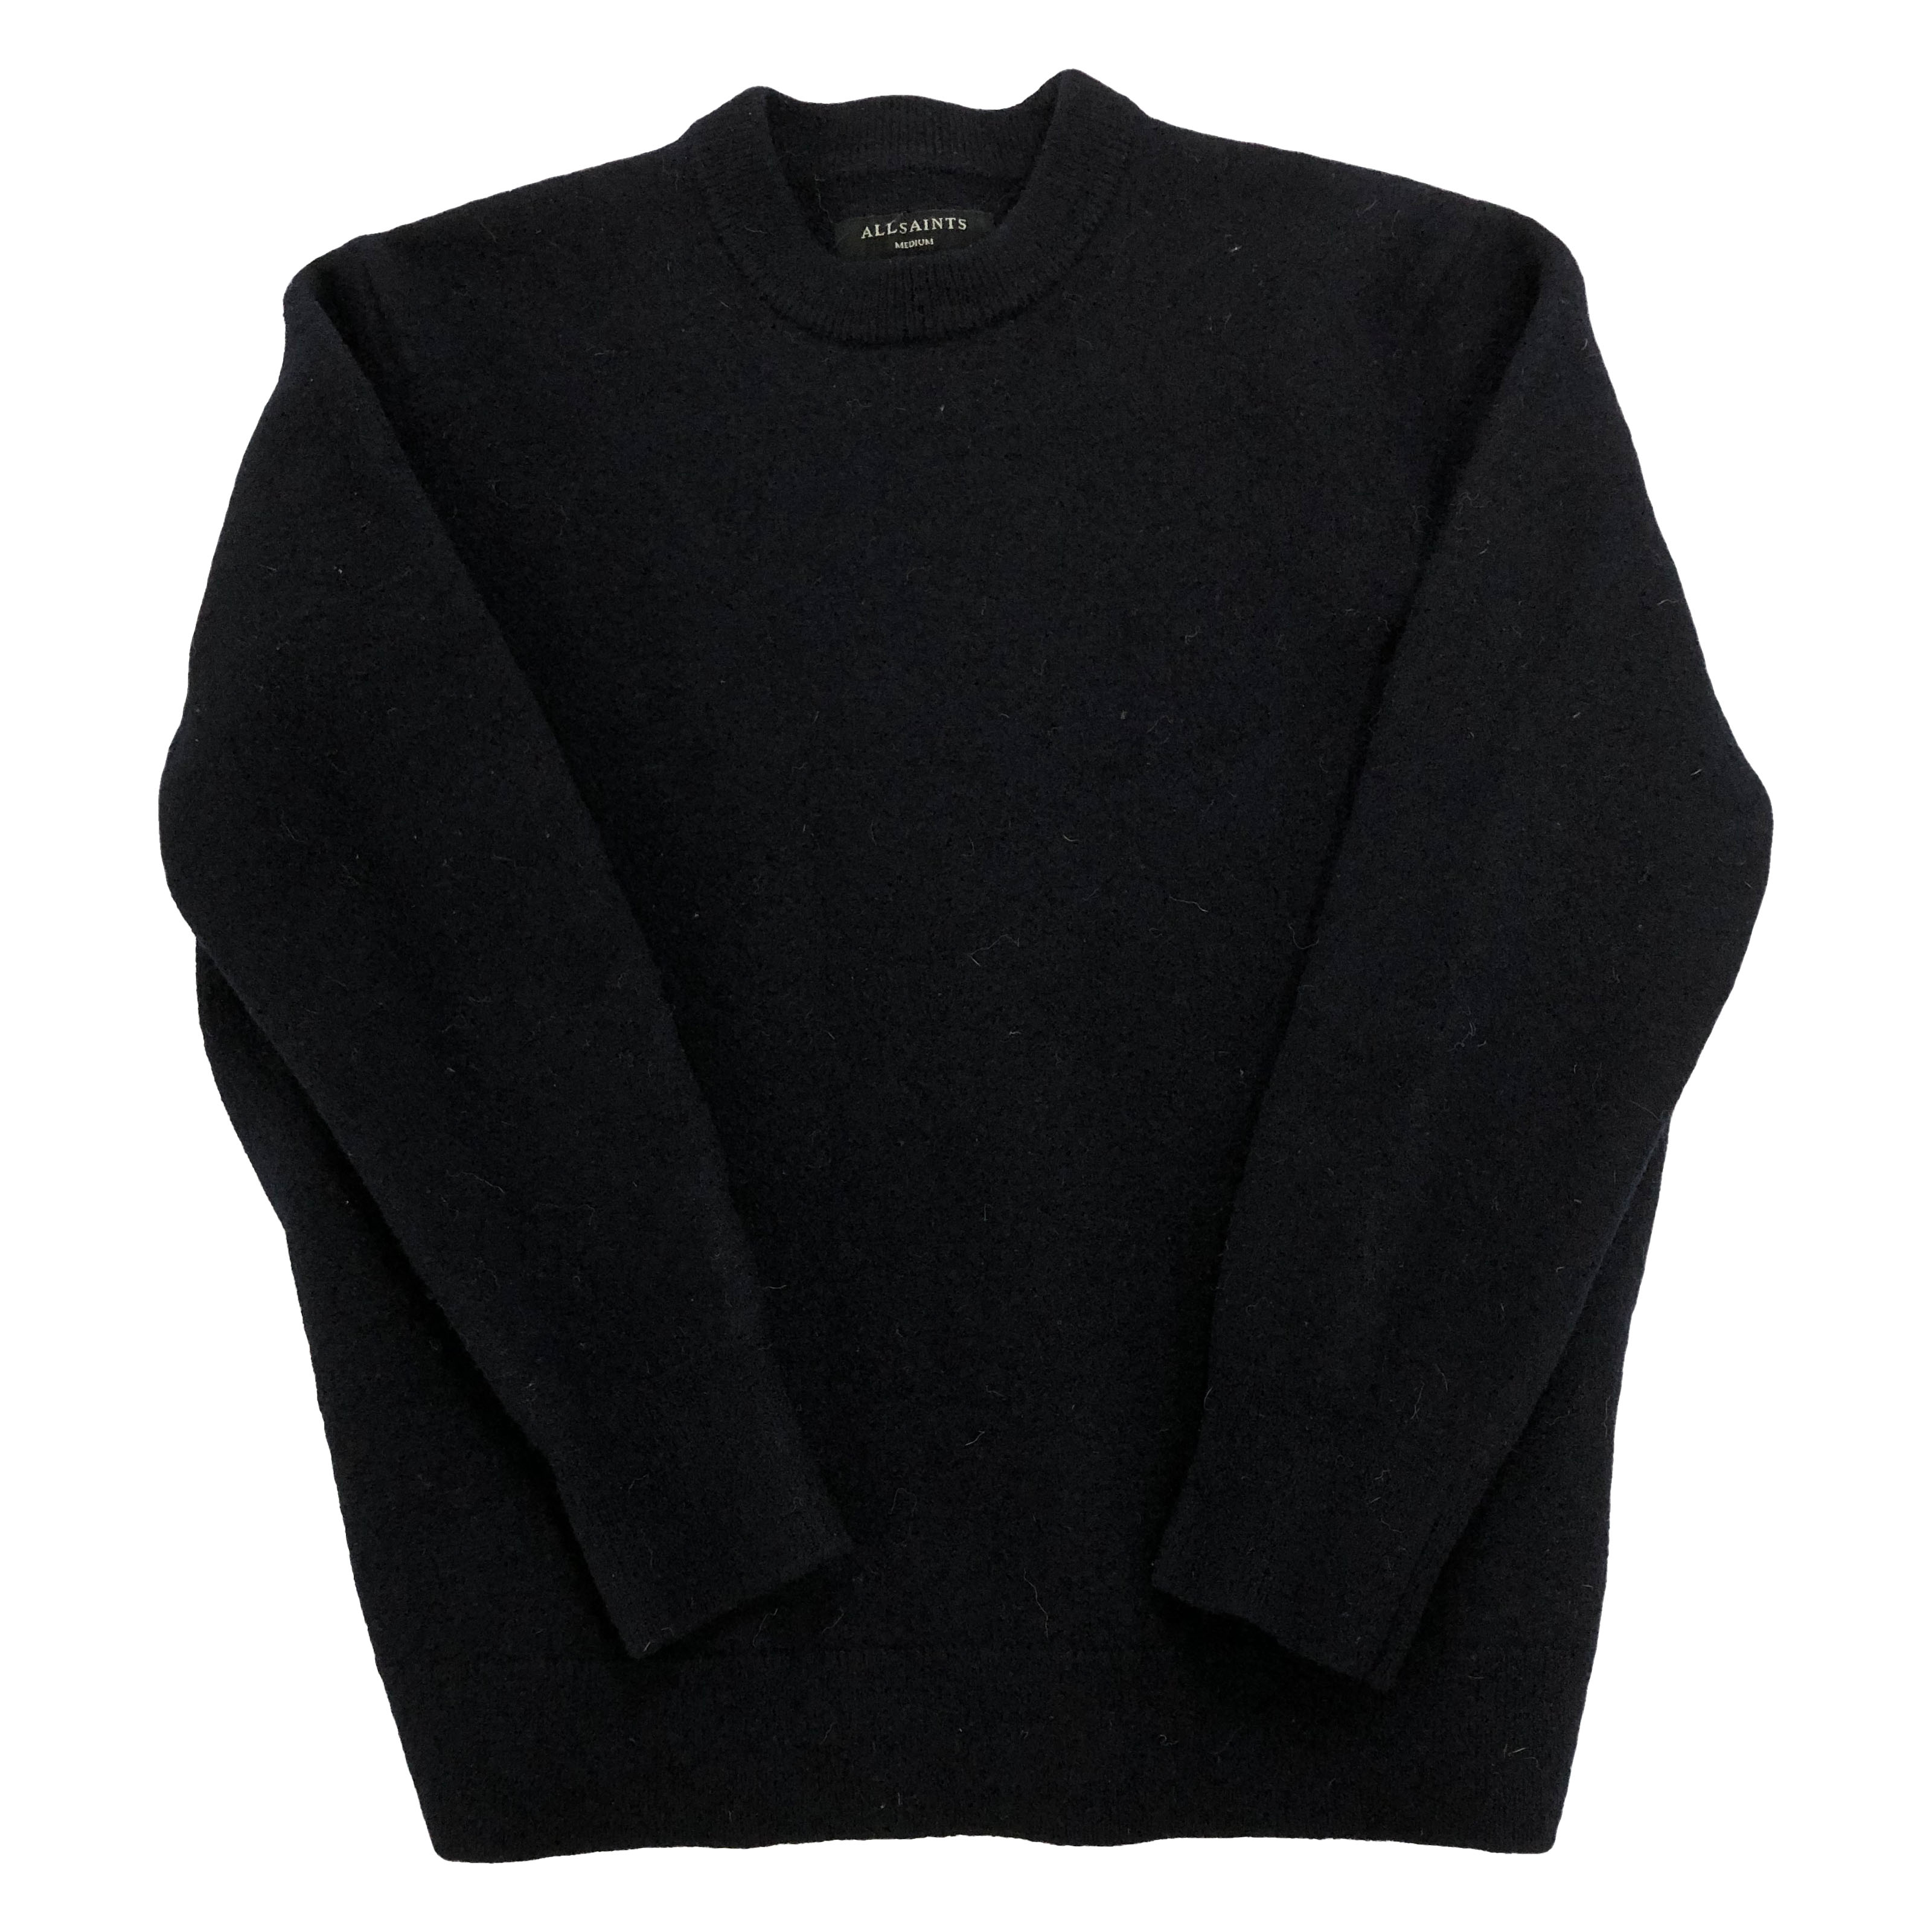 [All Saints] Wool Knit Sweater - Size M